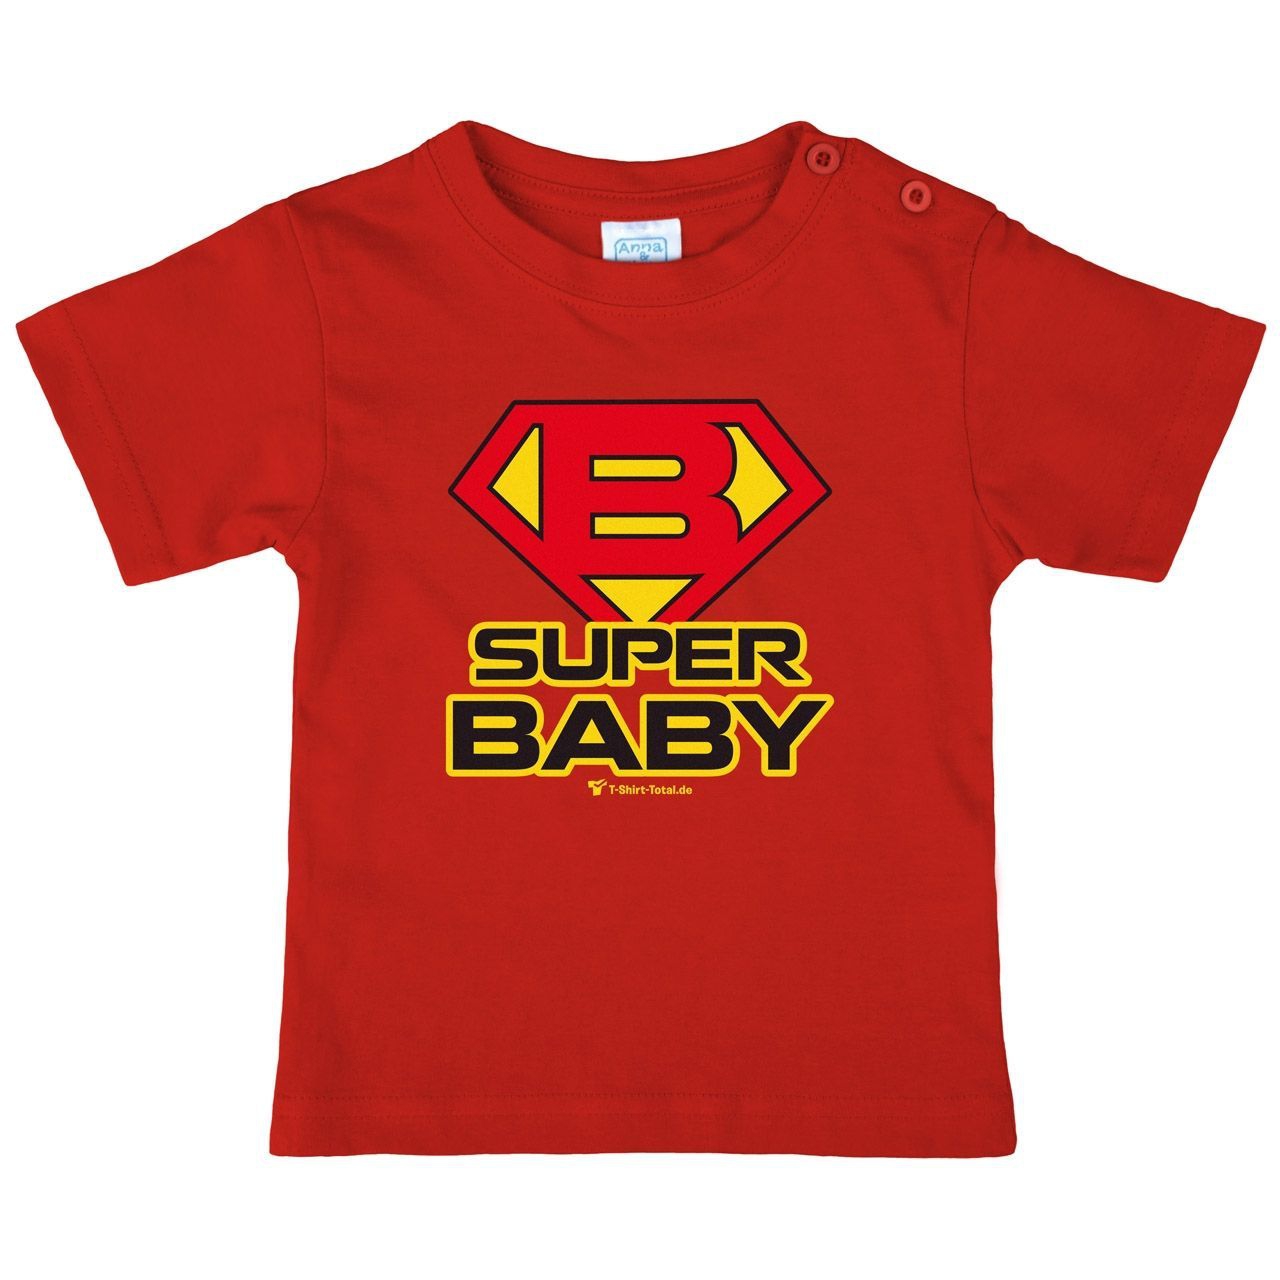 Super Baby Kinder T-Shirt rot 92